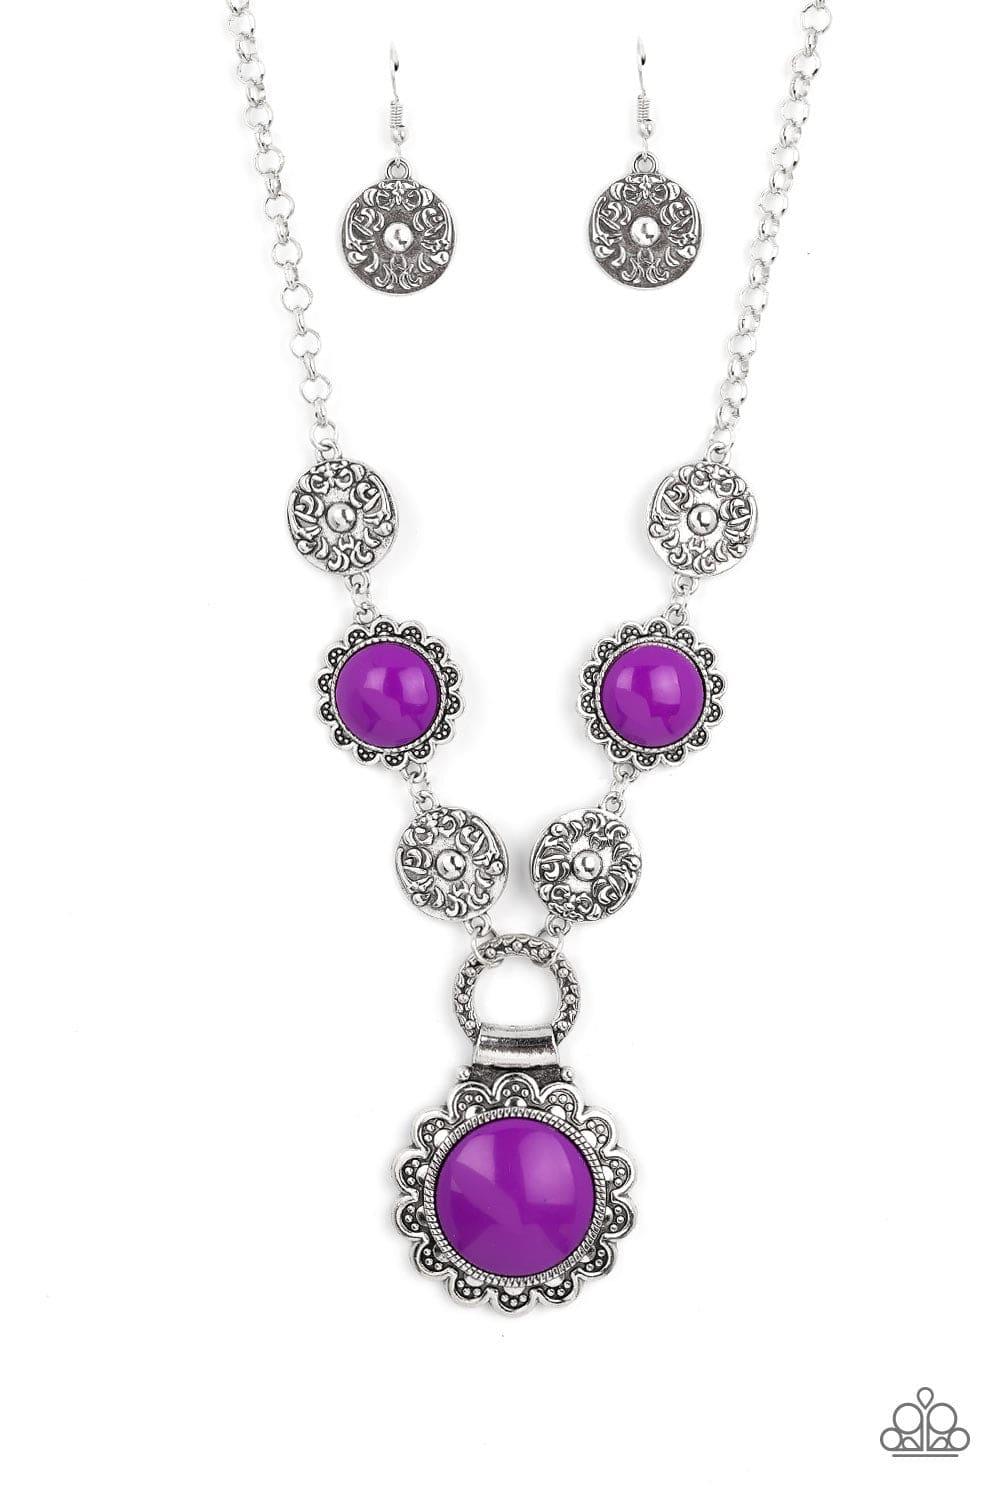 Paparazzi Accessories - Poppy Persuasion - Purple Necklace - Bling by JessieK